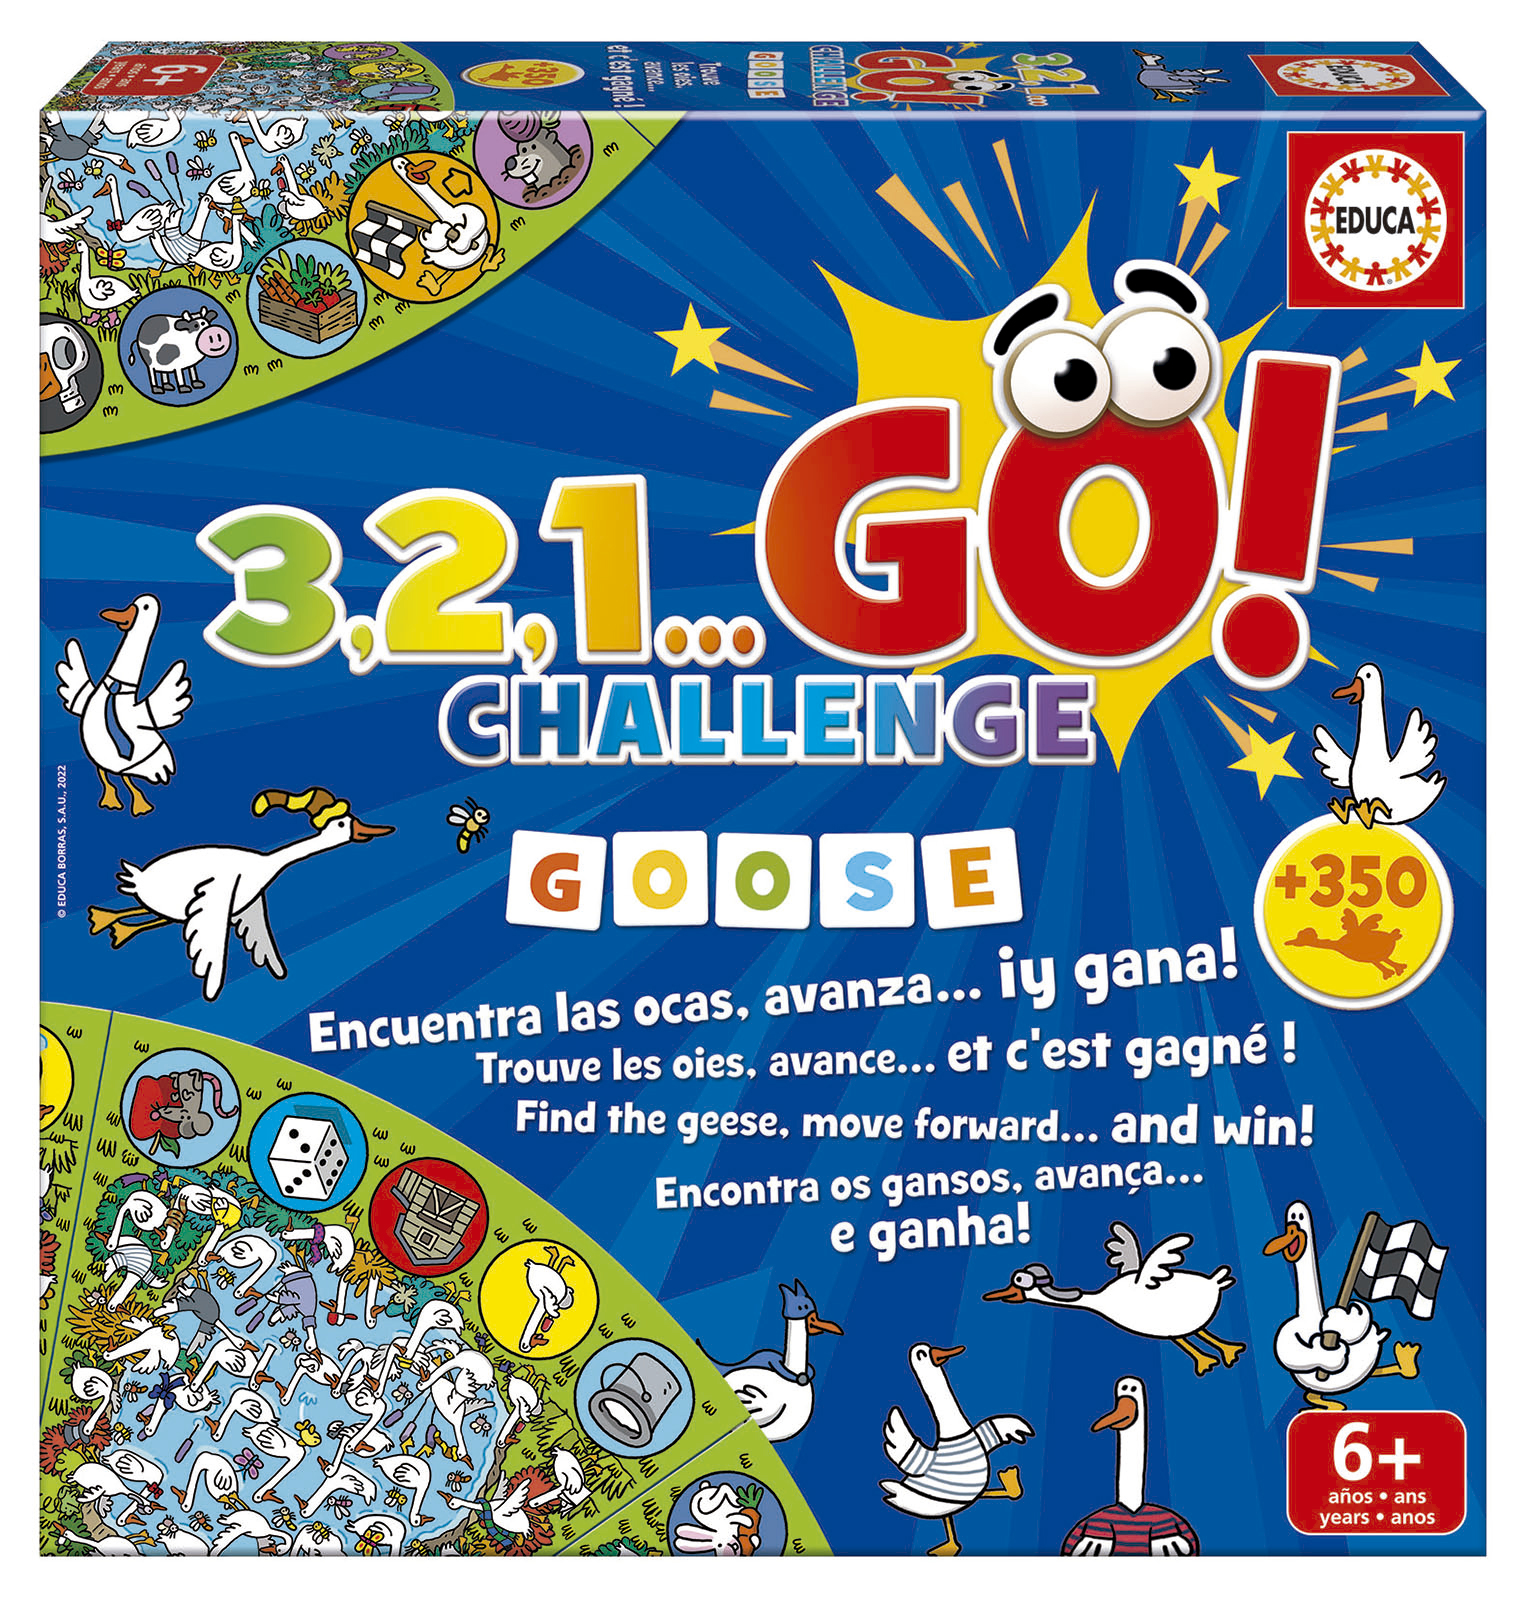 Jogo de Mesa Educa 3,2,1..Challenge Puzzle - Educa